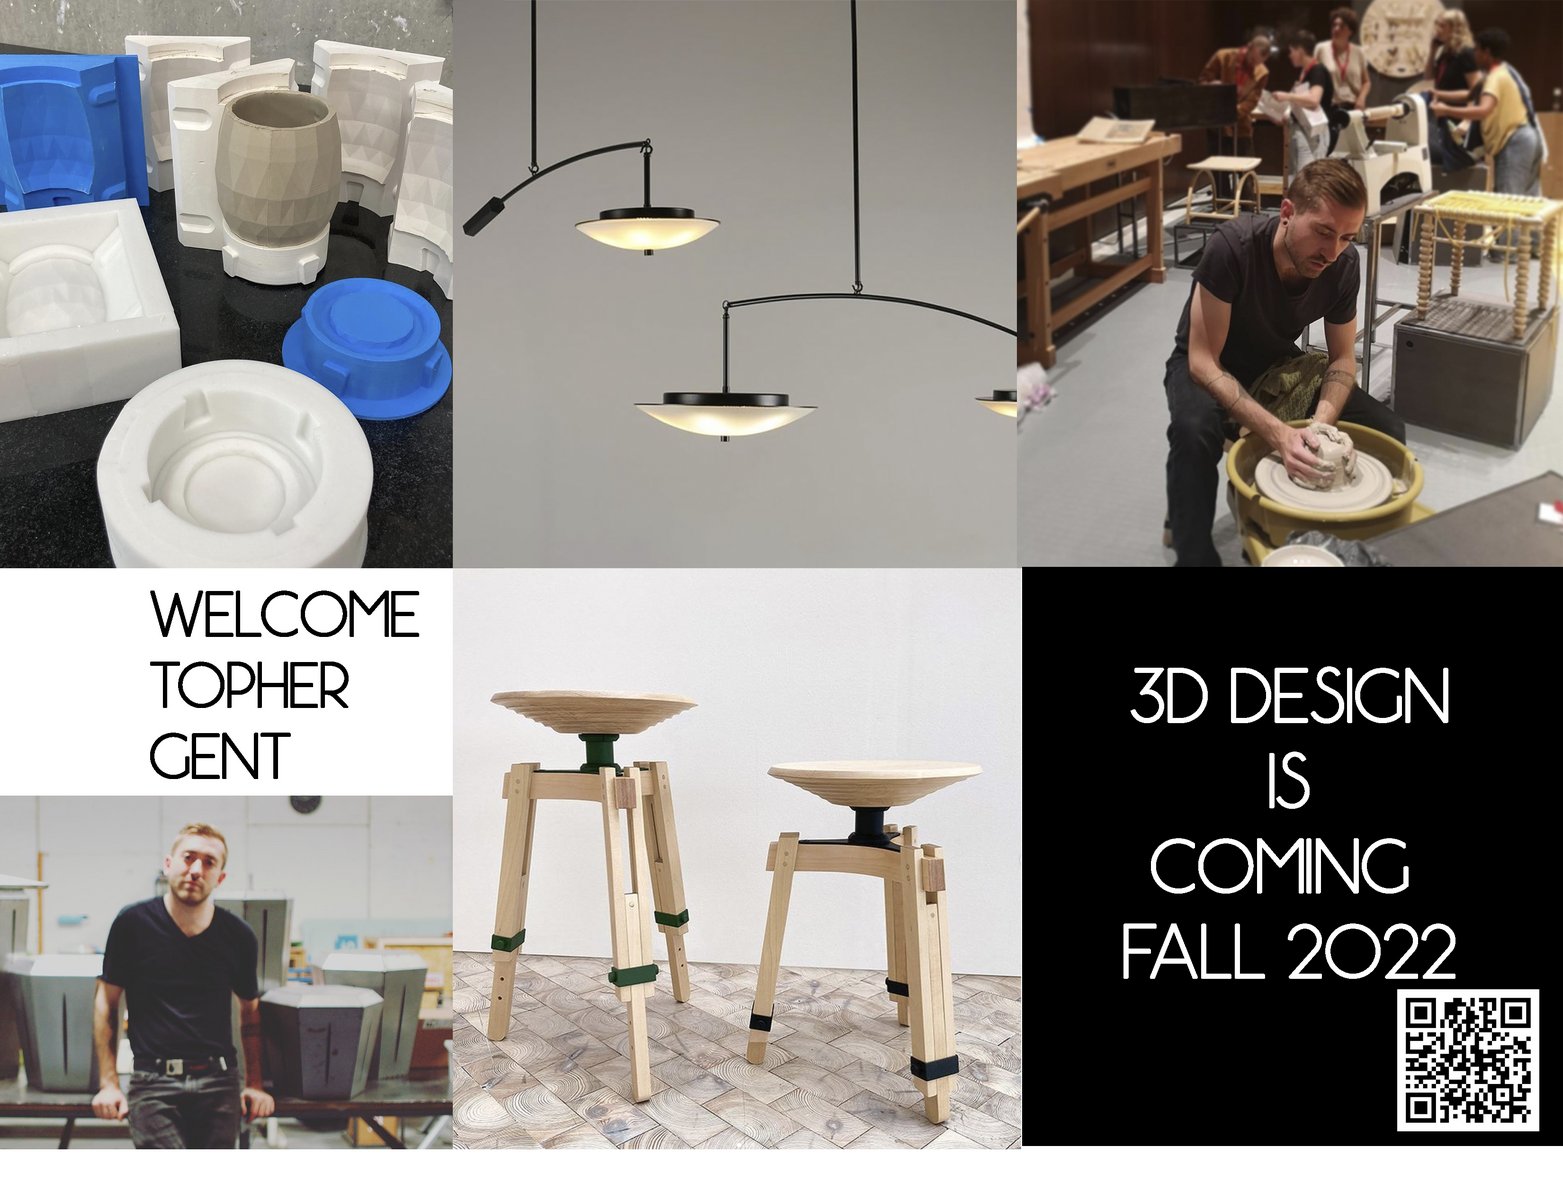 Fall 2022 3D Design courses